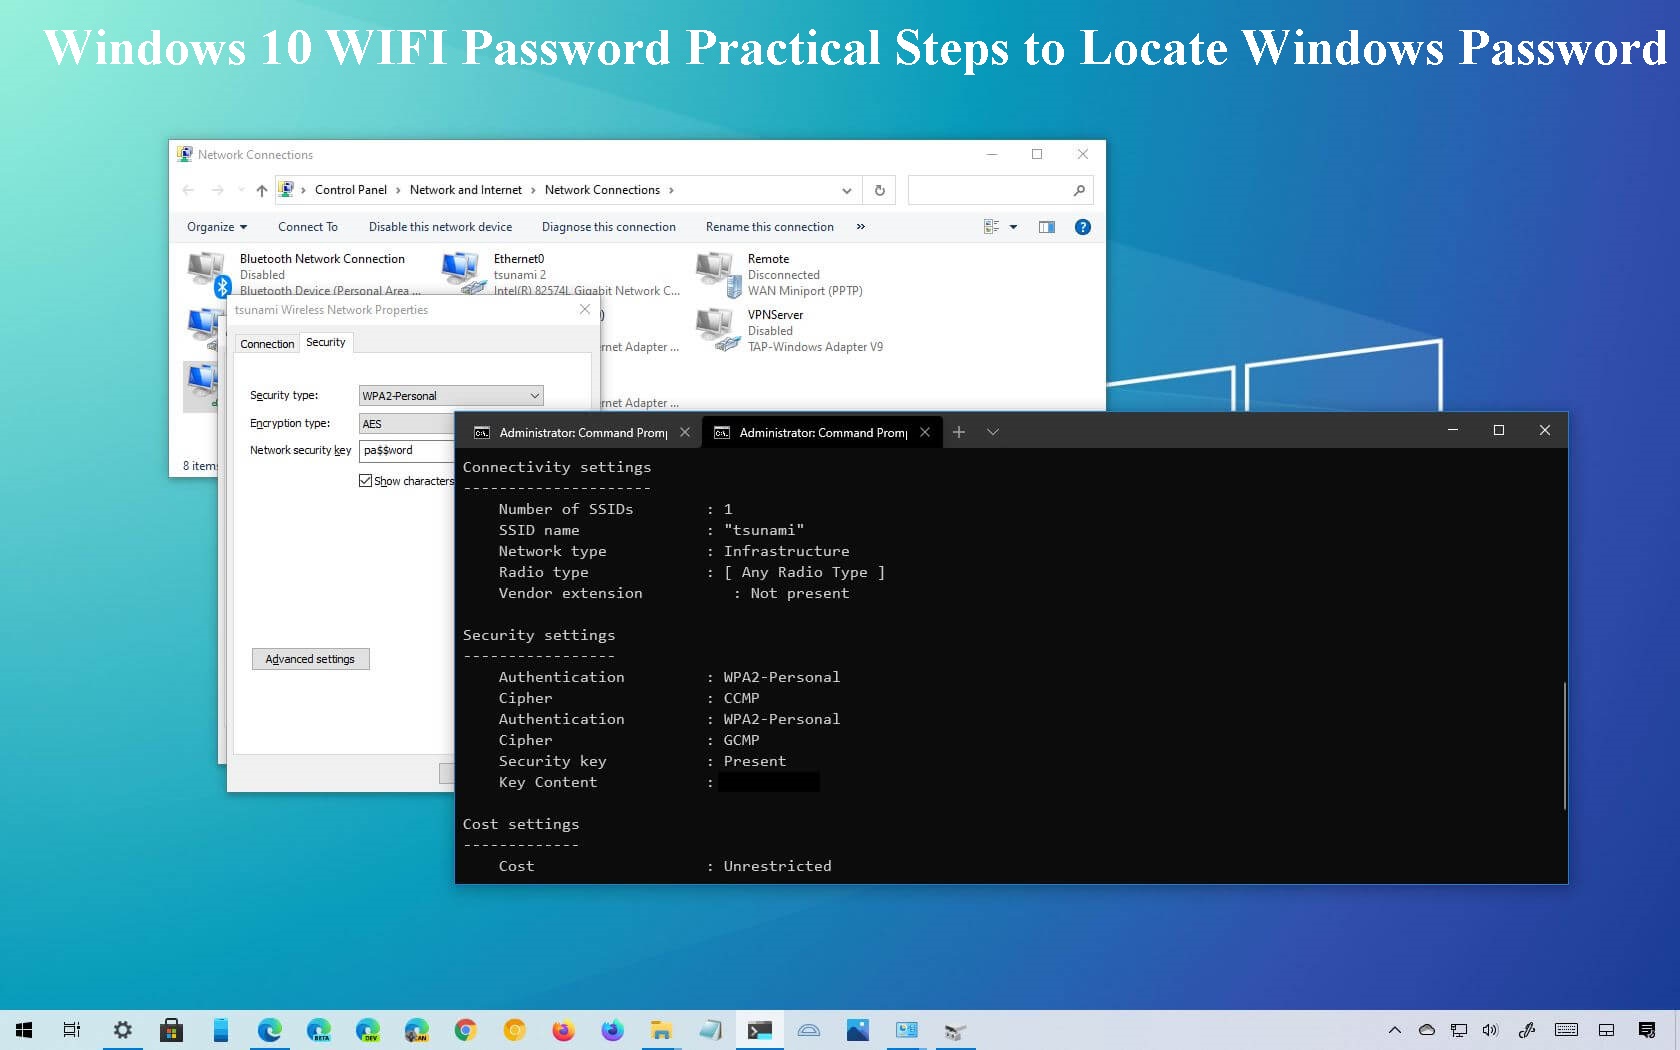 Windows 10 WIFI Password Practical Steps to Locate Windows Password